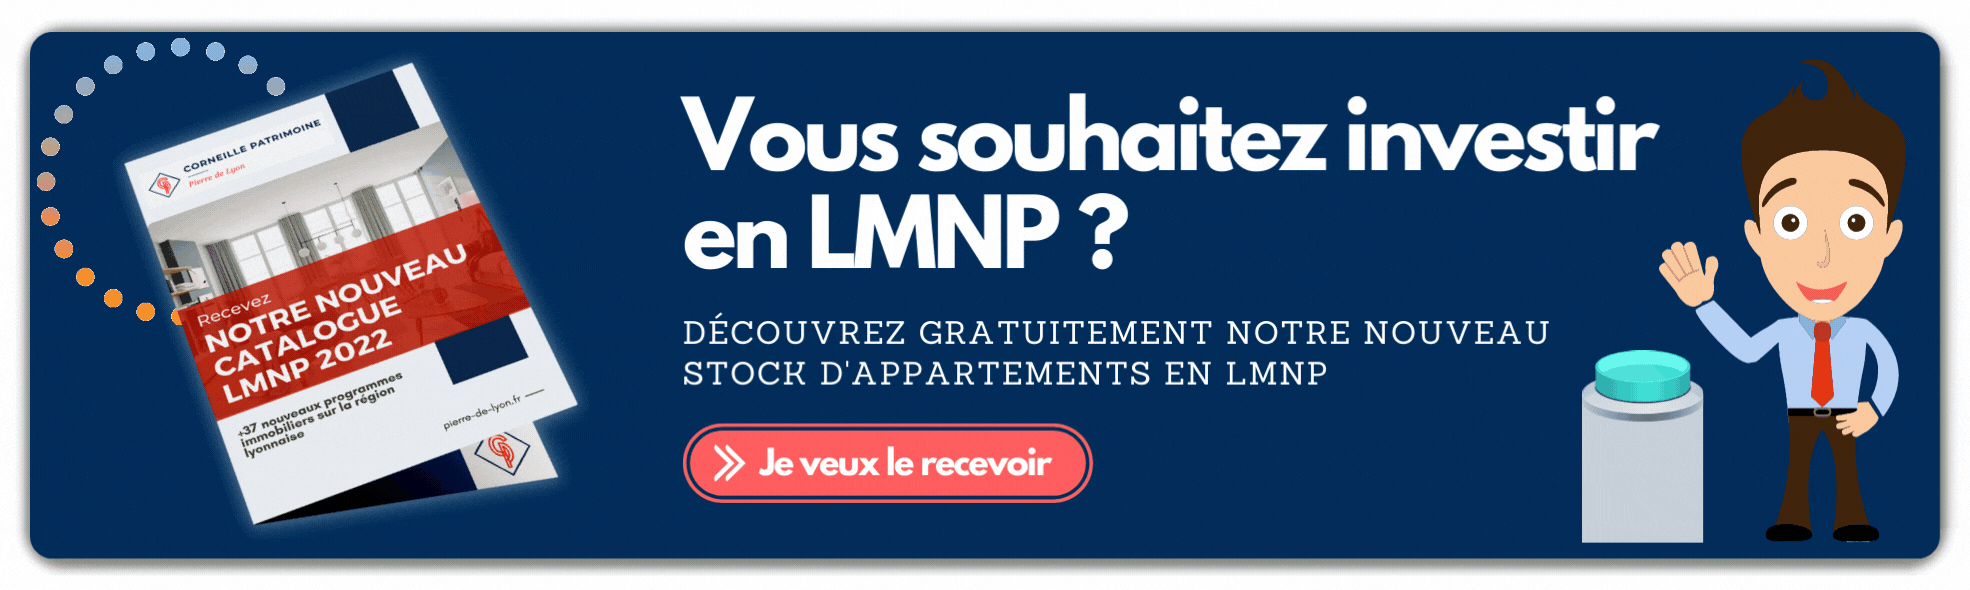 corneille-patrimoine-investir-loi-lmnp